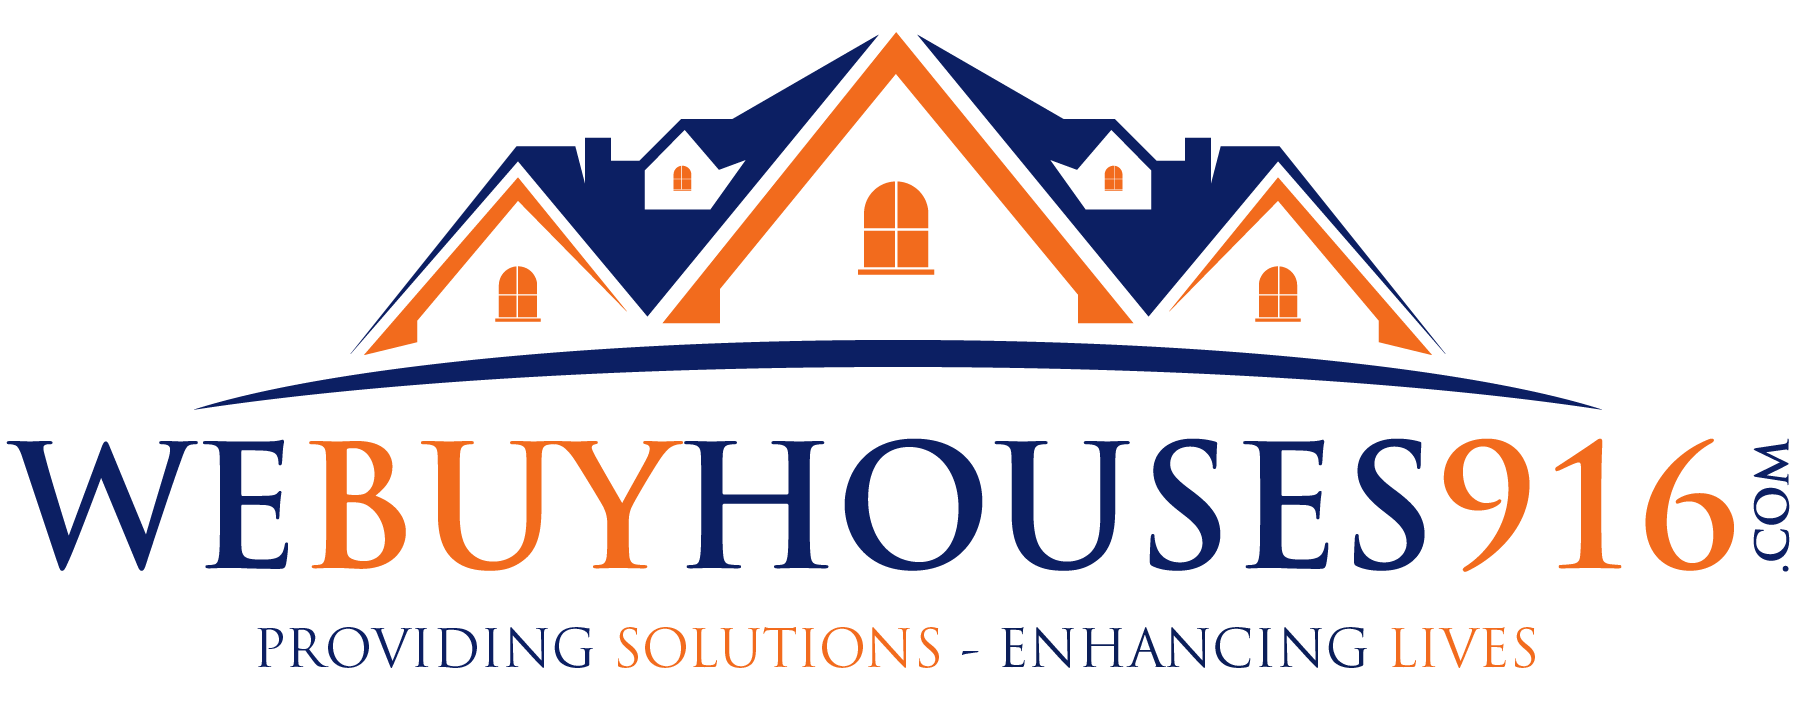 WeBuyHouses916 logo